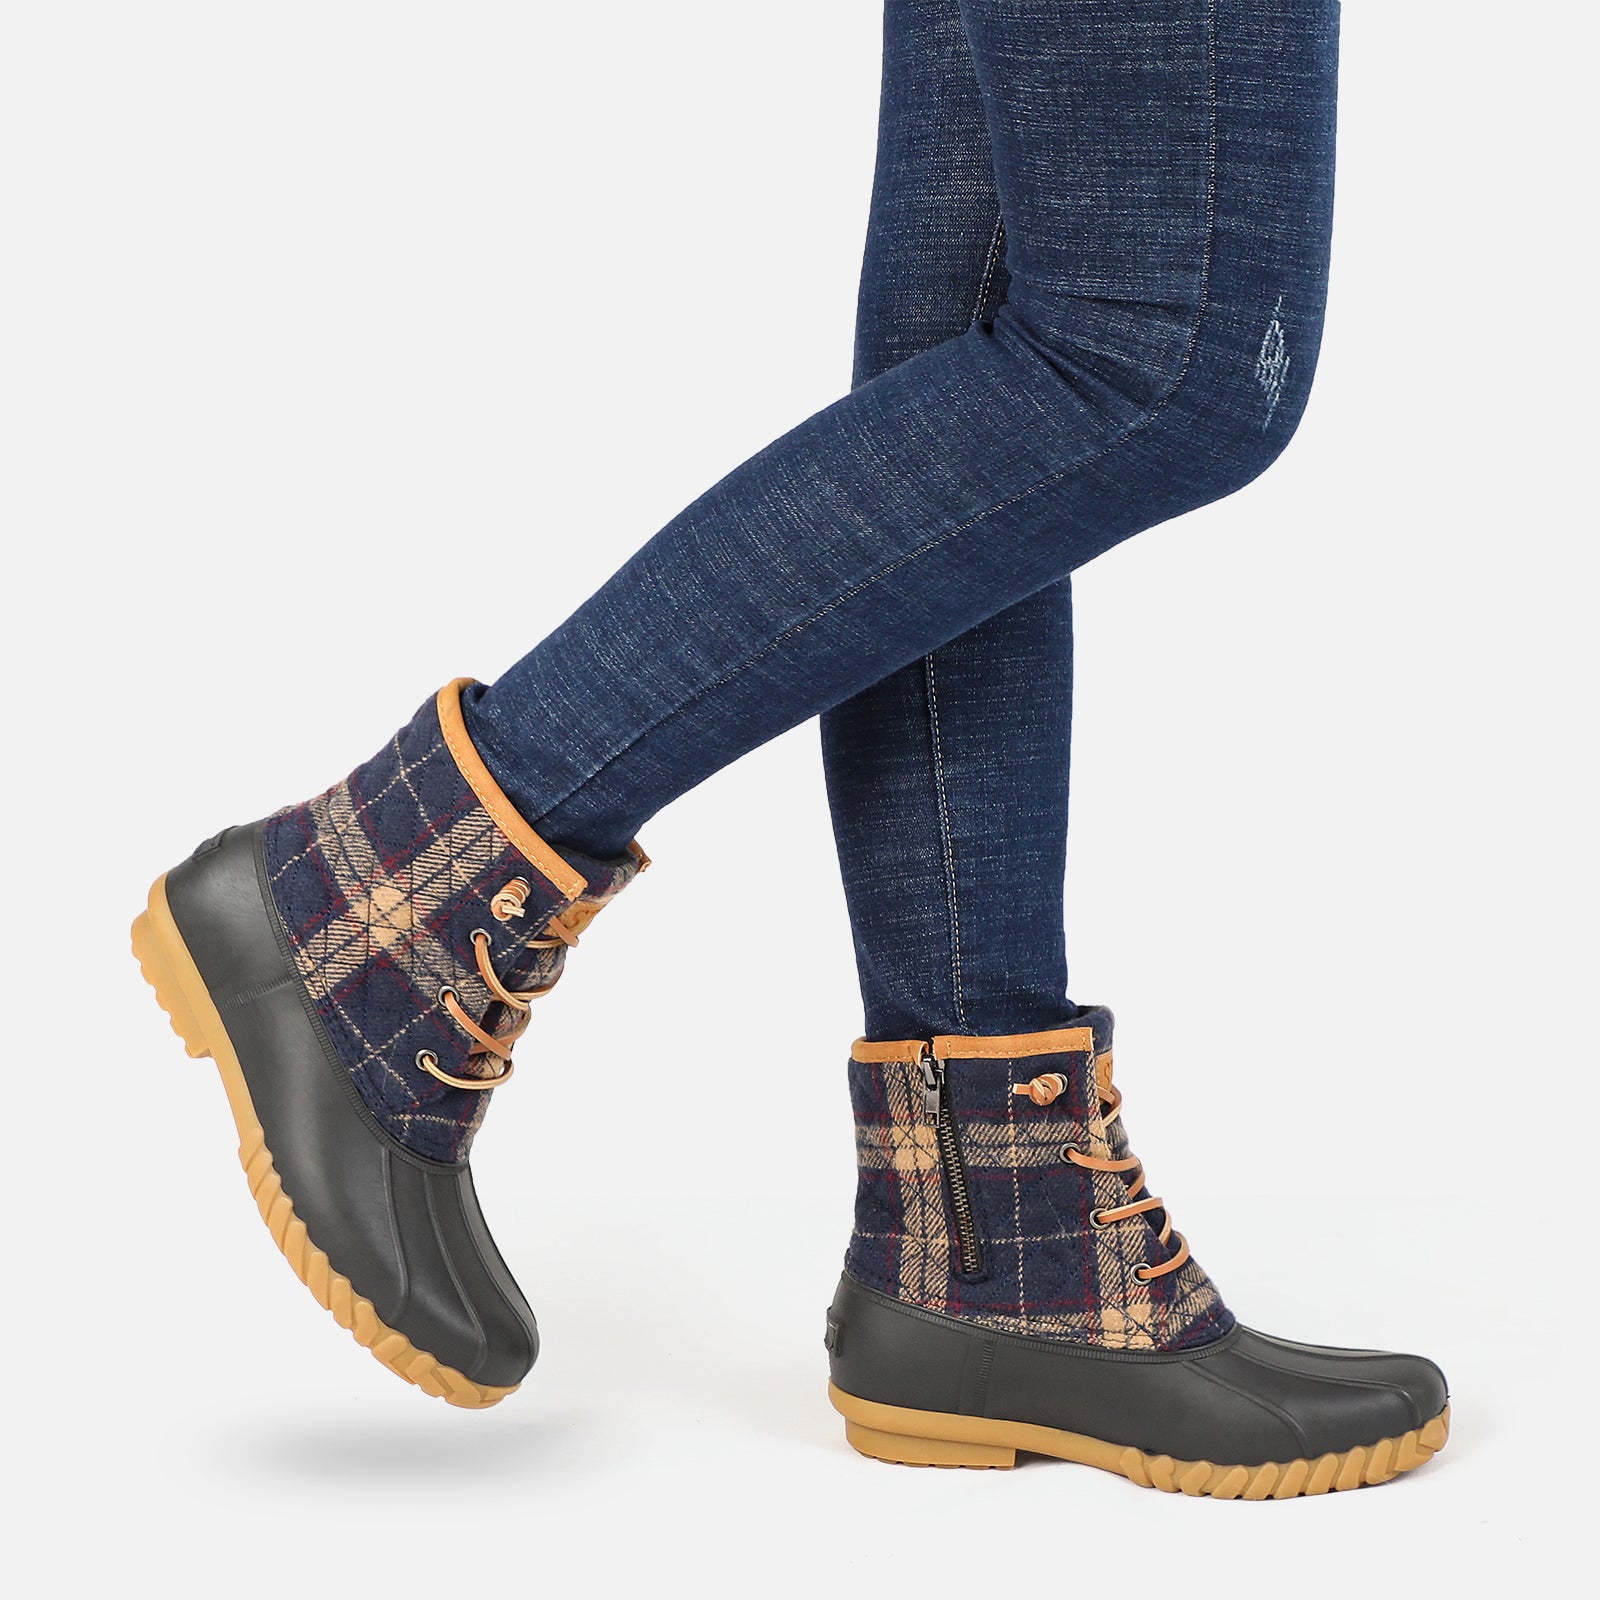 stq-women-duct-boots-waterproof-Winter-product-view